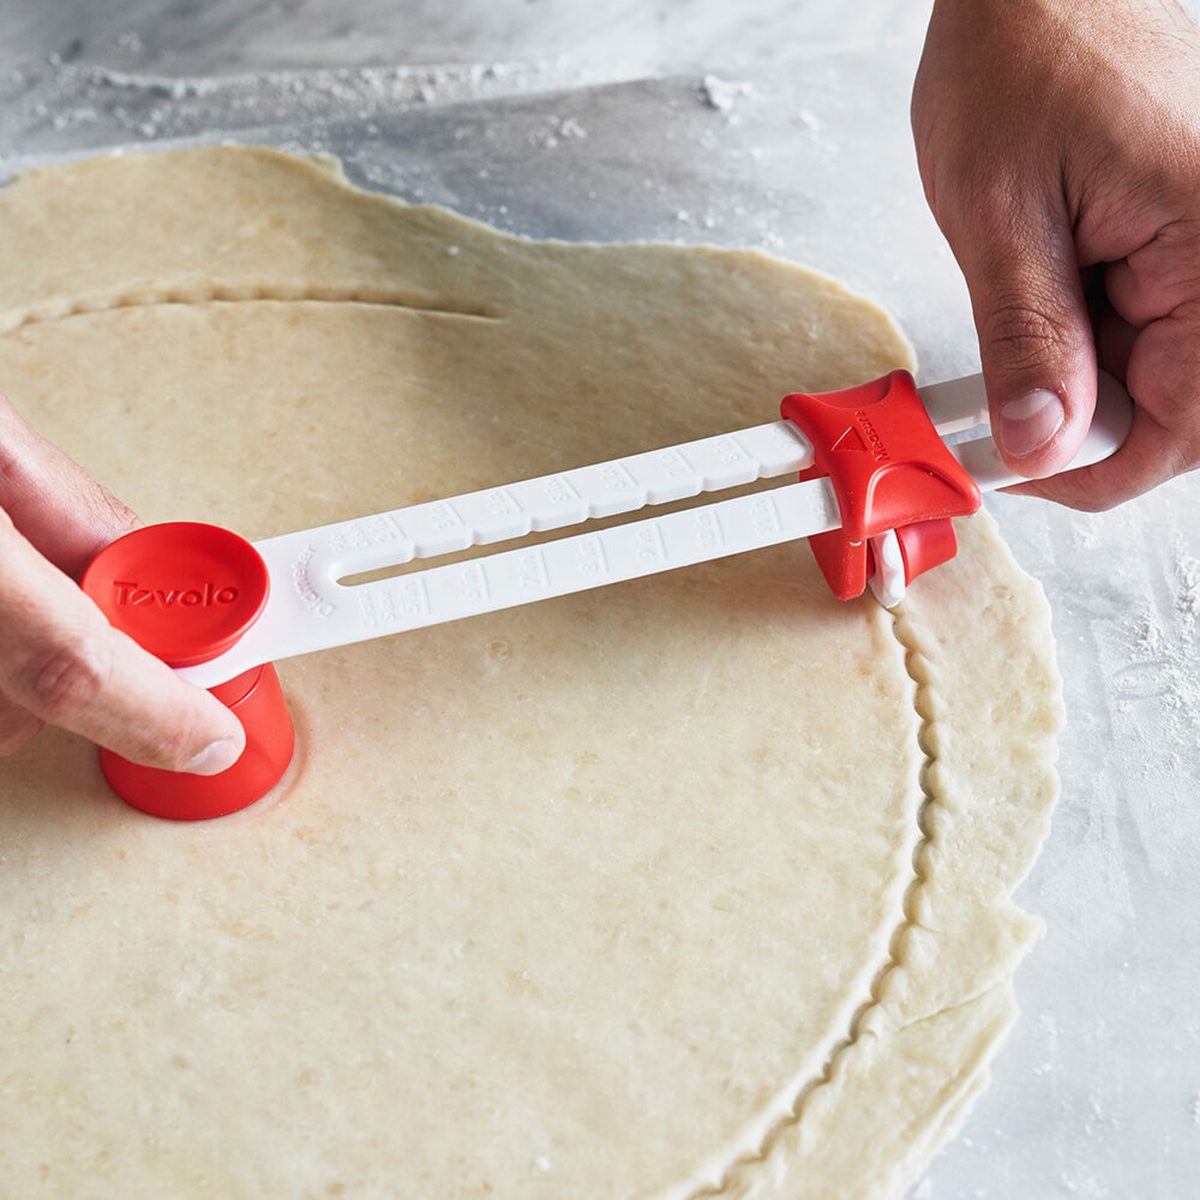 Tovolo Precision Pie Crust Cutter With Measurement Guide, Nylon